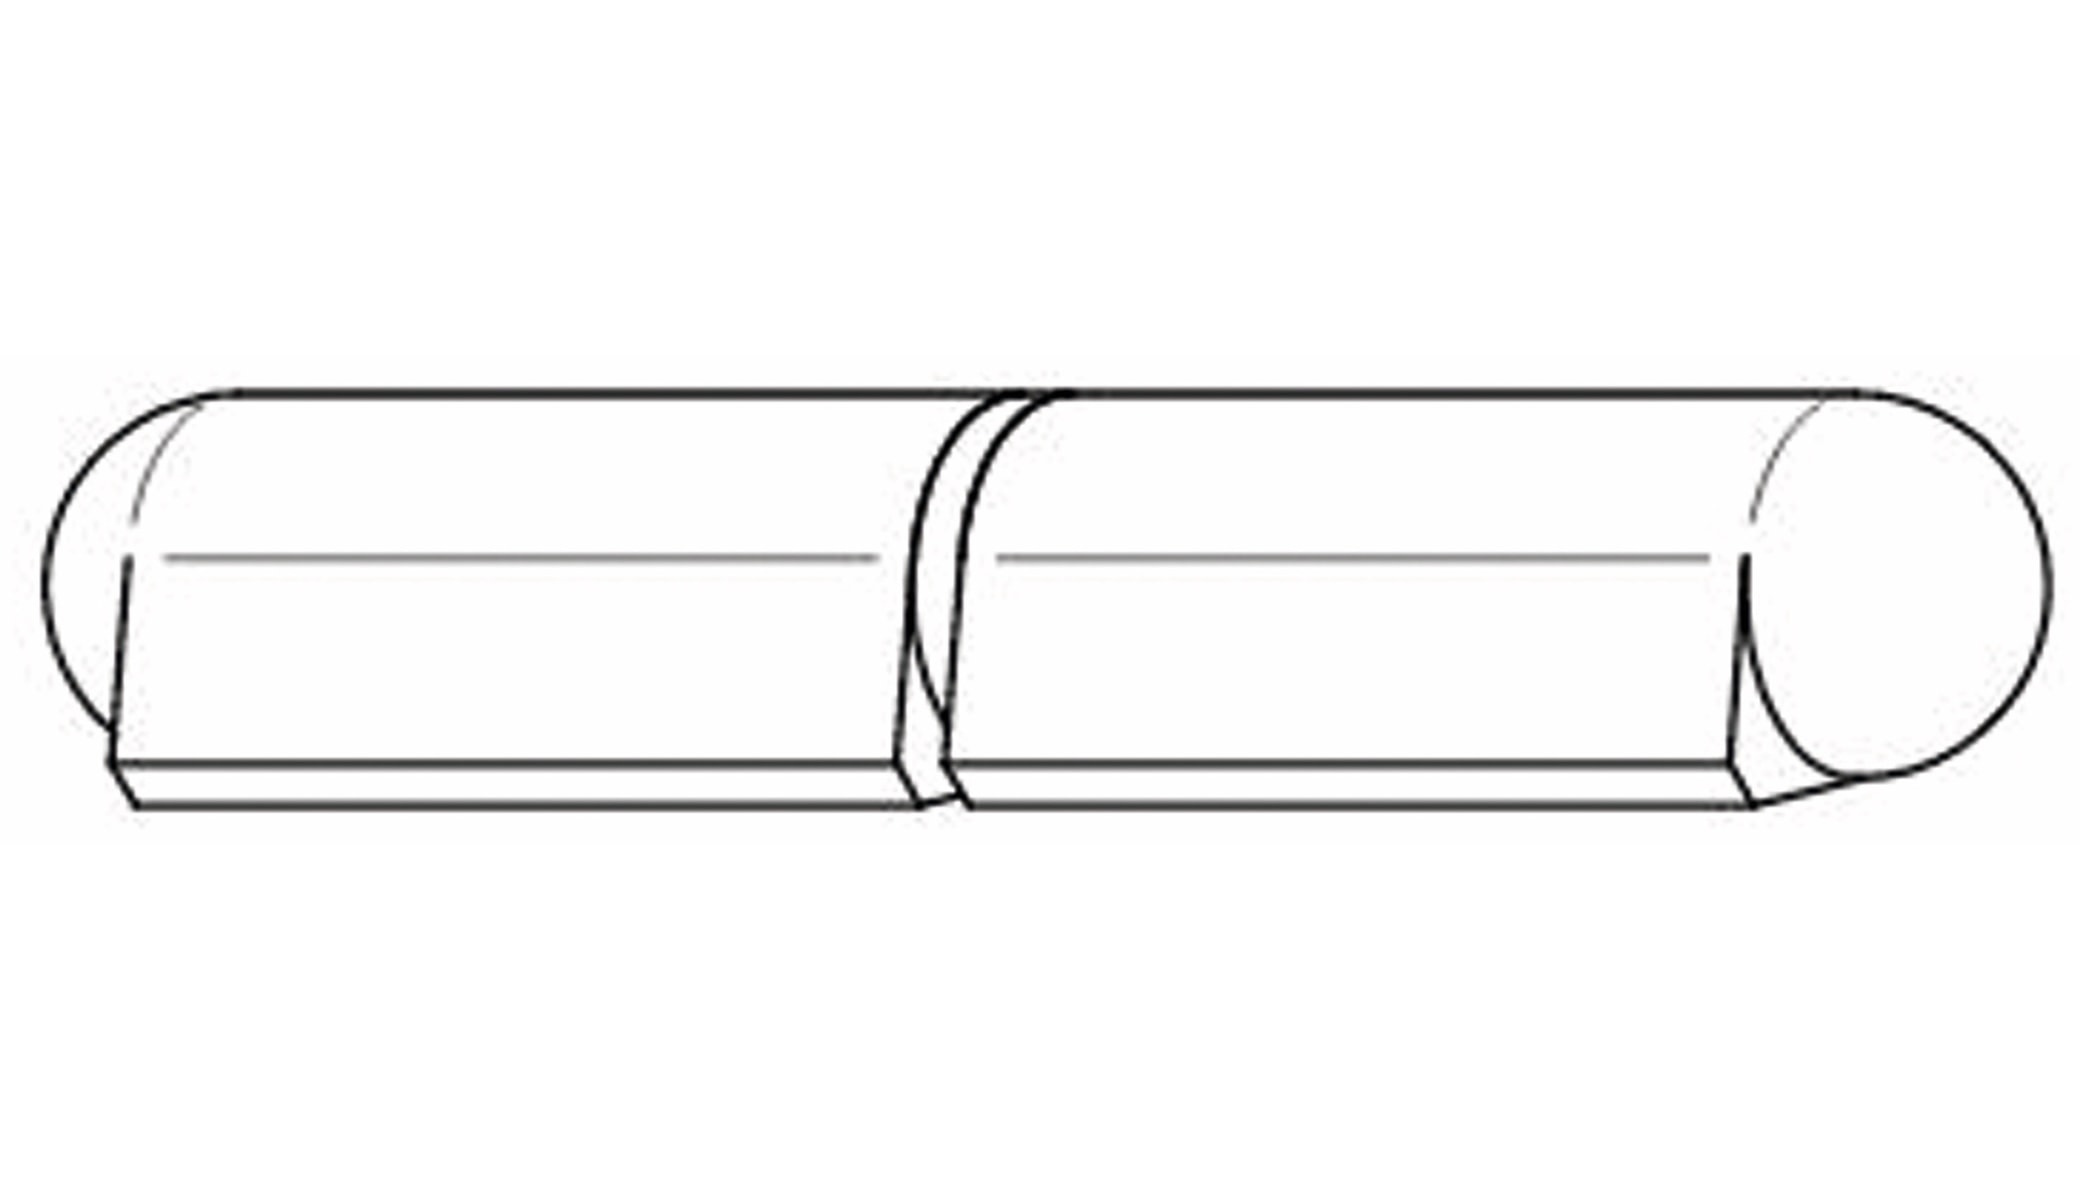 Bandrolle, Anschweißscharnier, 80x12 mm, 2-teilig, Stahl